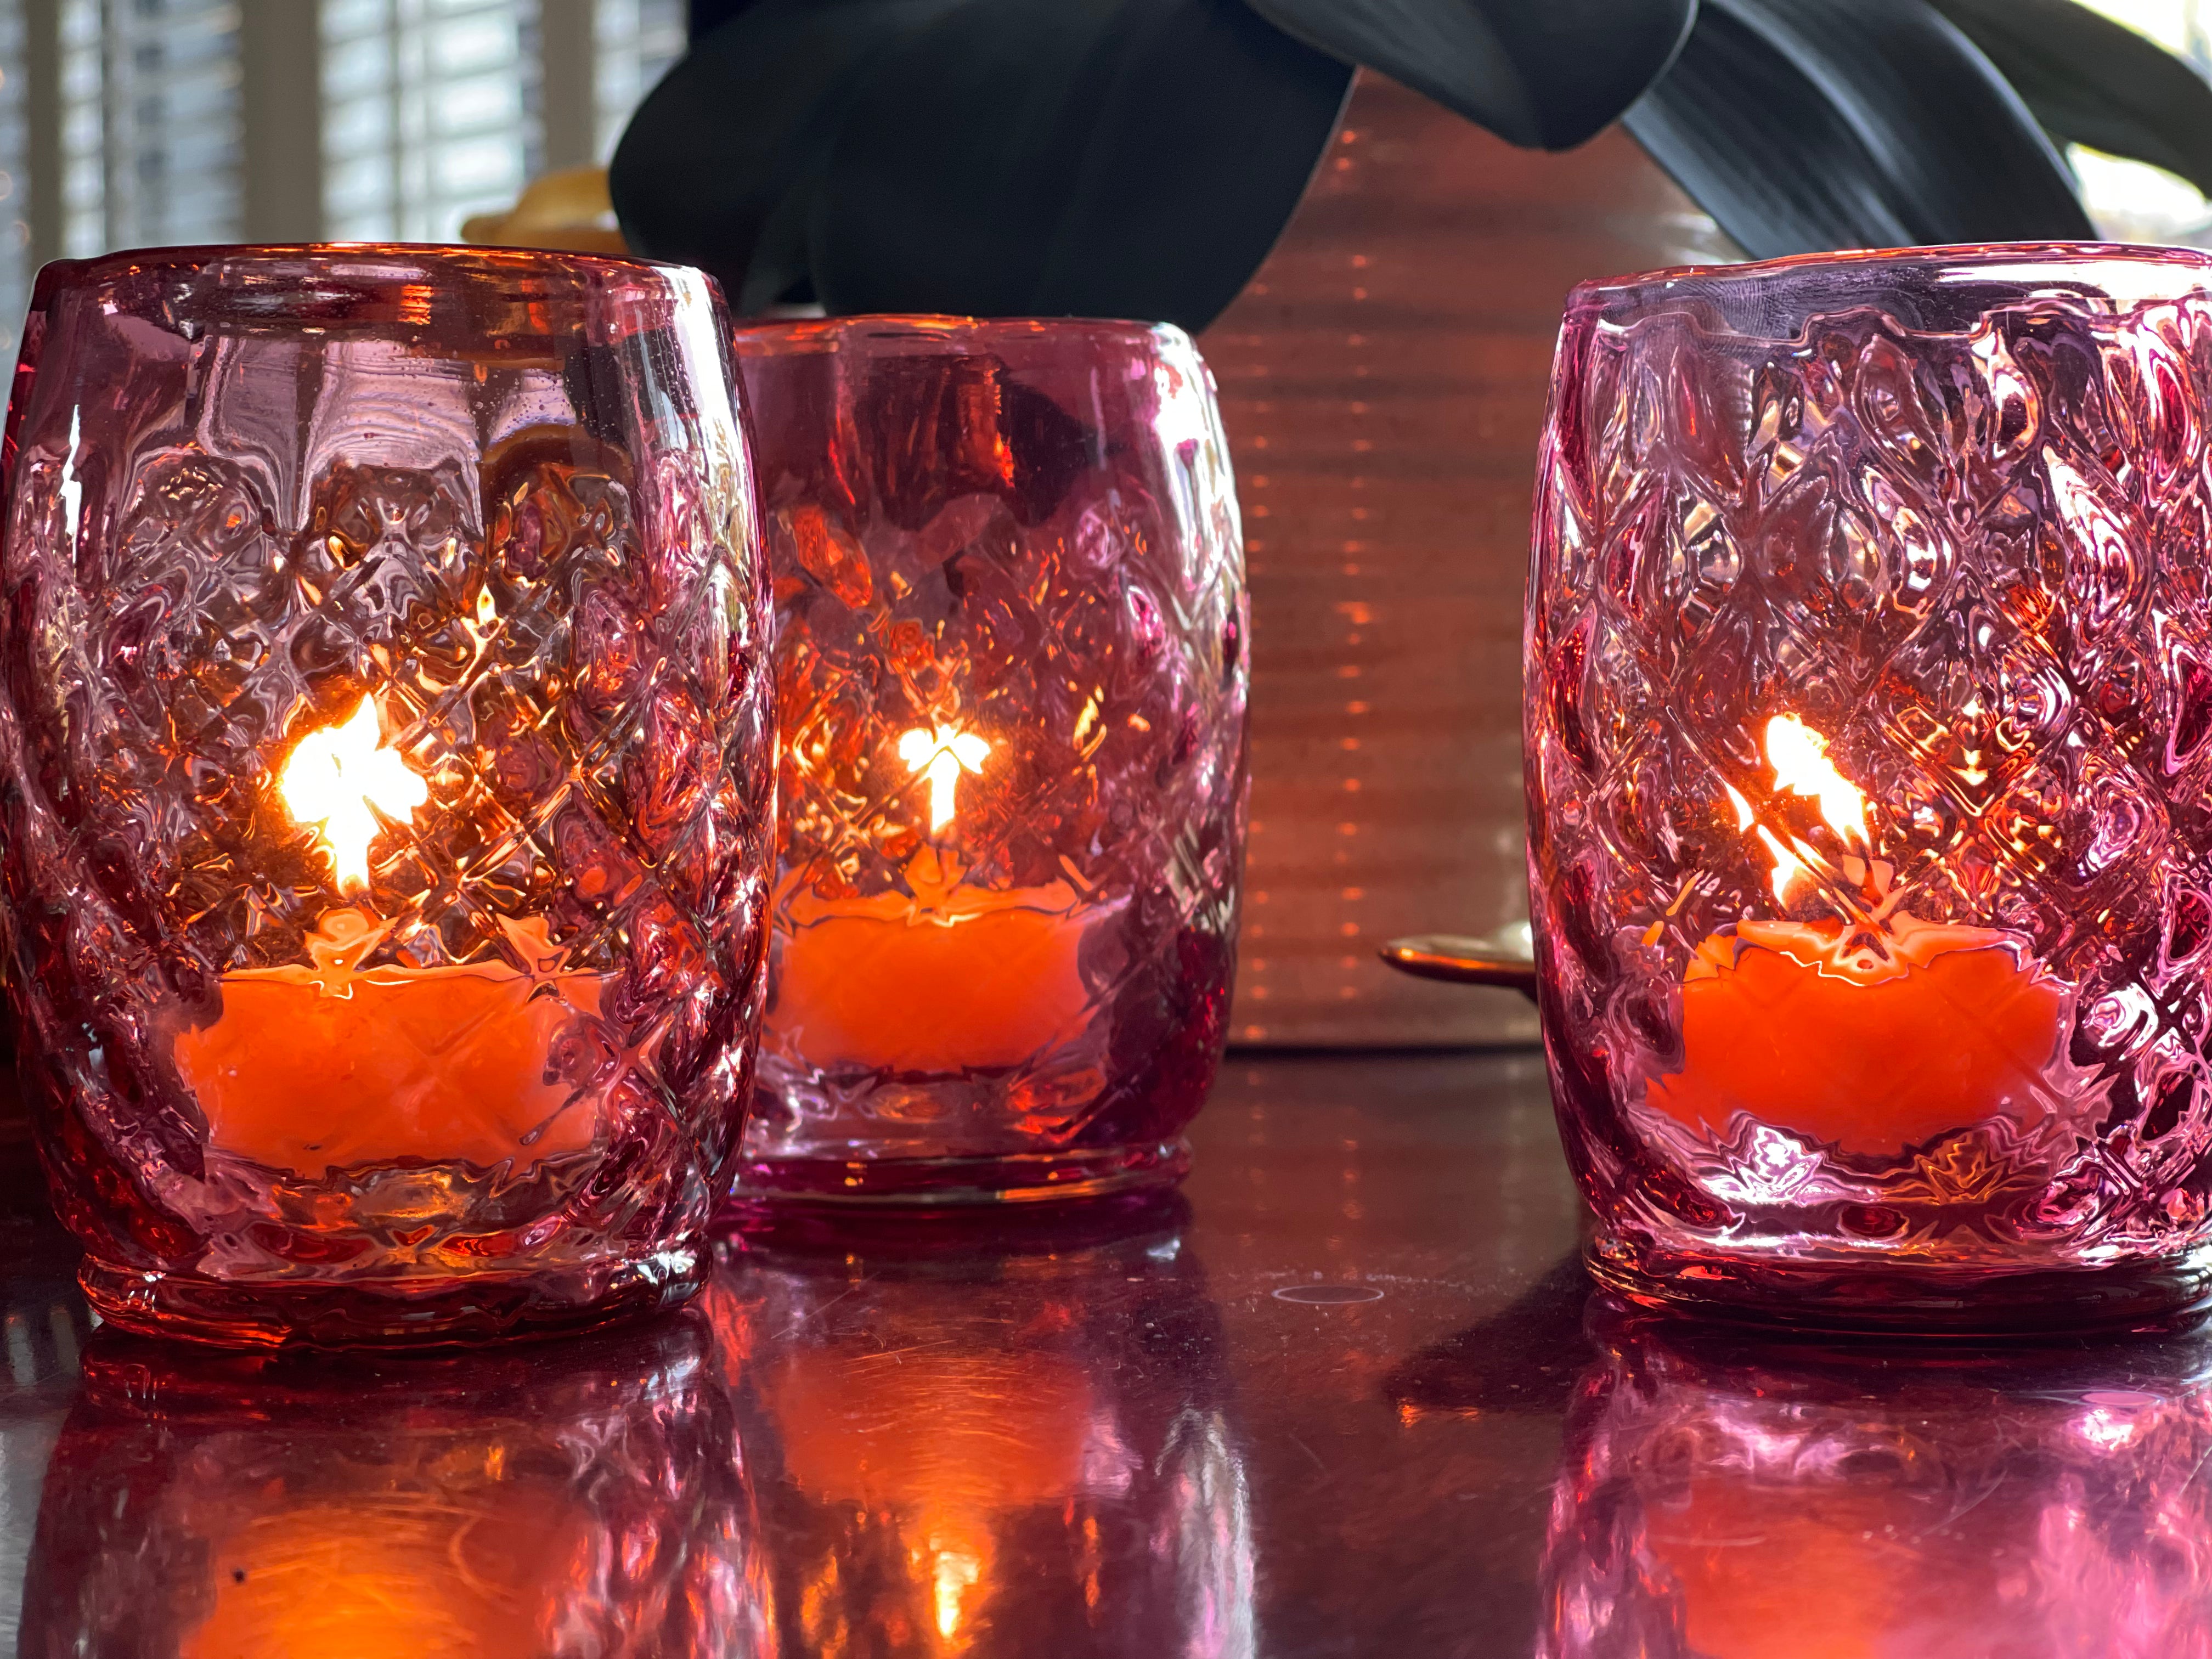 NEW! Fenton Cranberry Glass Tealight Holder, 7 Raw Tealights, Candle Lighter Gift Set